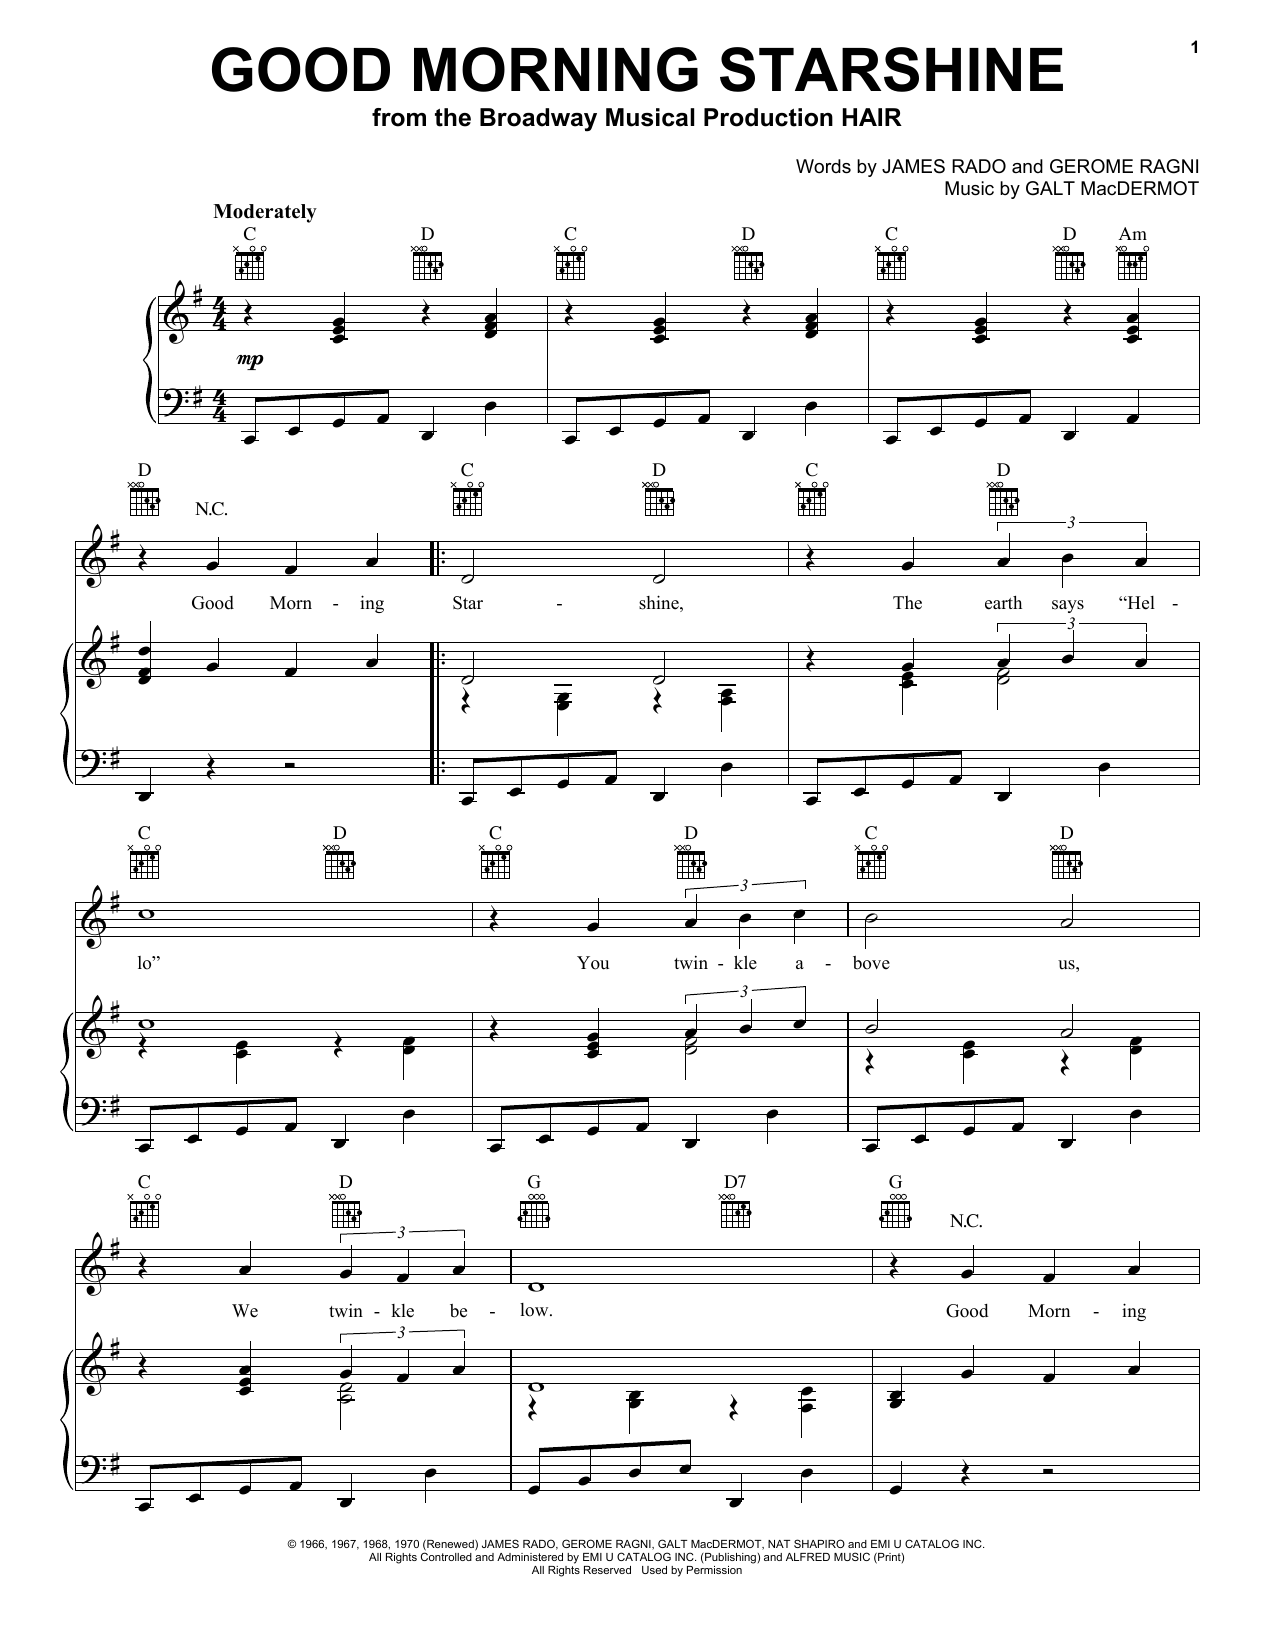 James Rado Good Morning Starshine Sheet Music Notes & Chords for Easy Piano - Download or Print PDF